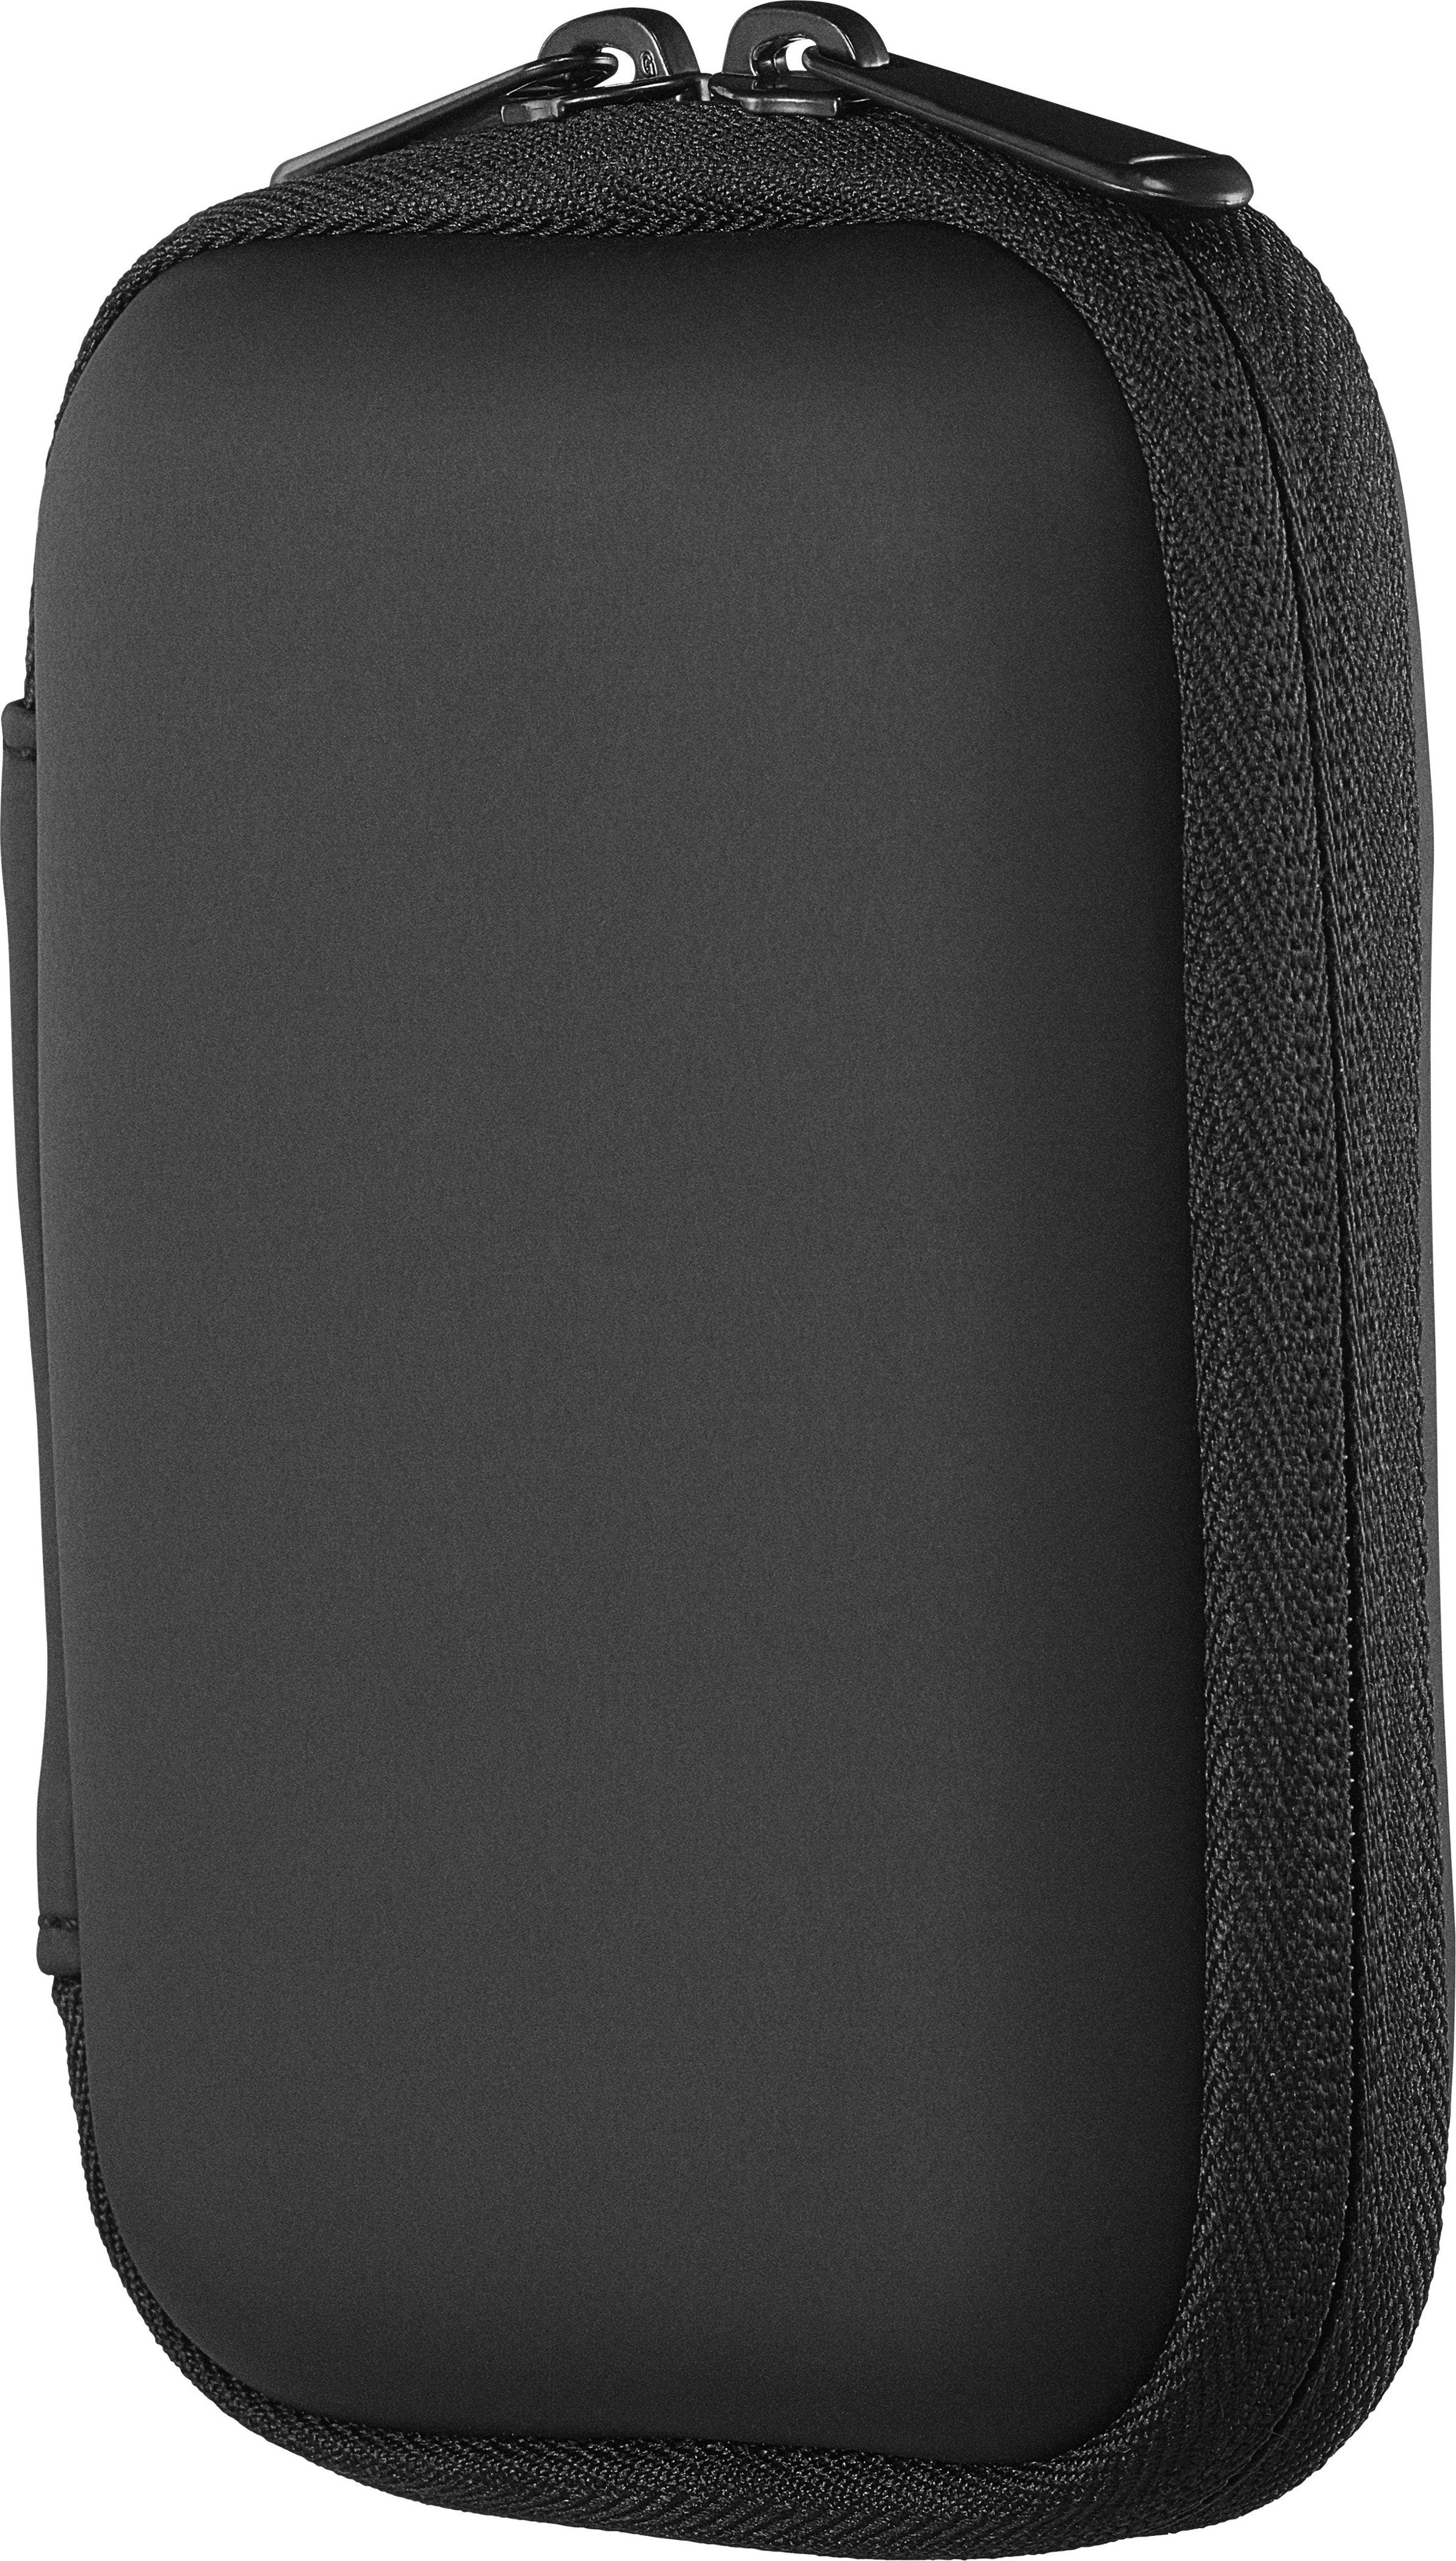 Insignia™ Portable Hard Drive Case Black NS-PCHDDC8 - Best Buy | Best Buy U.S.